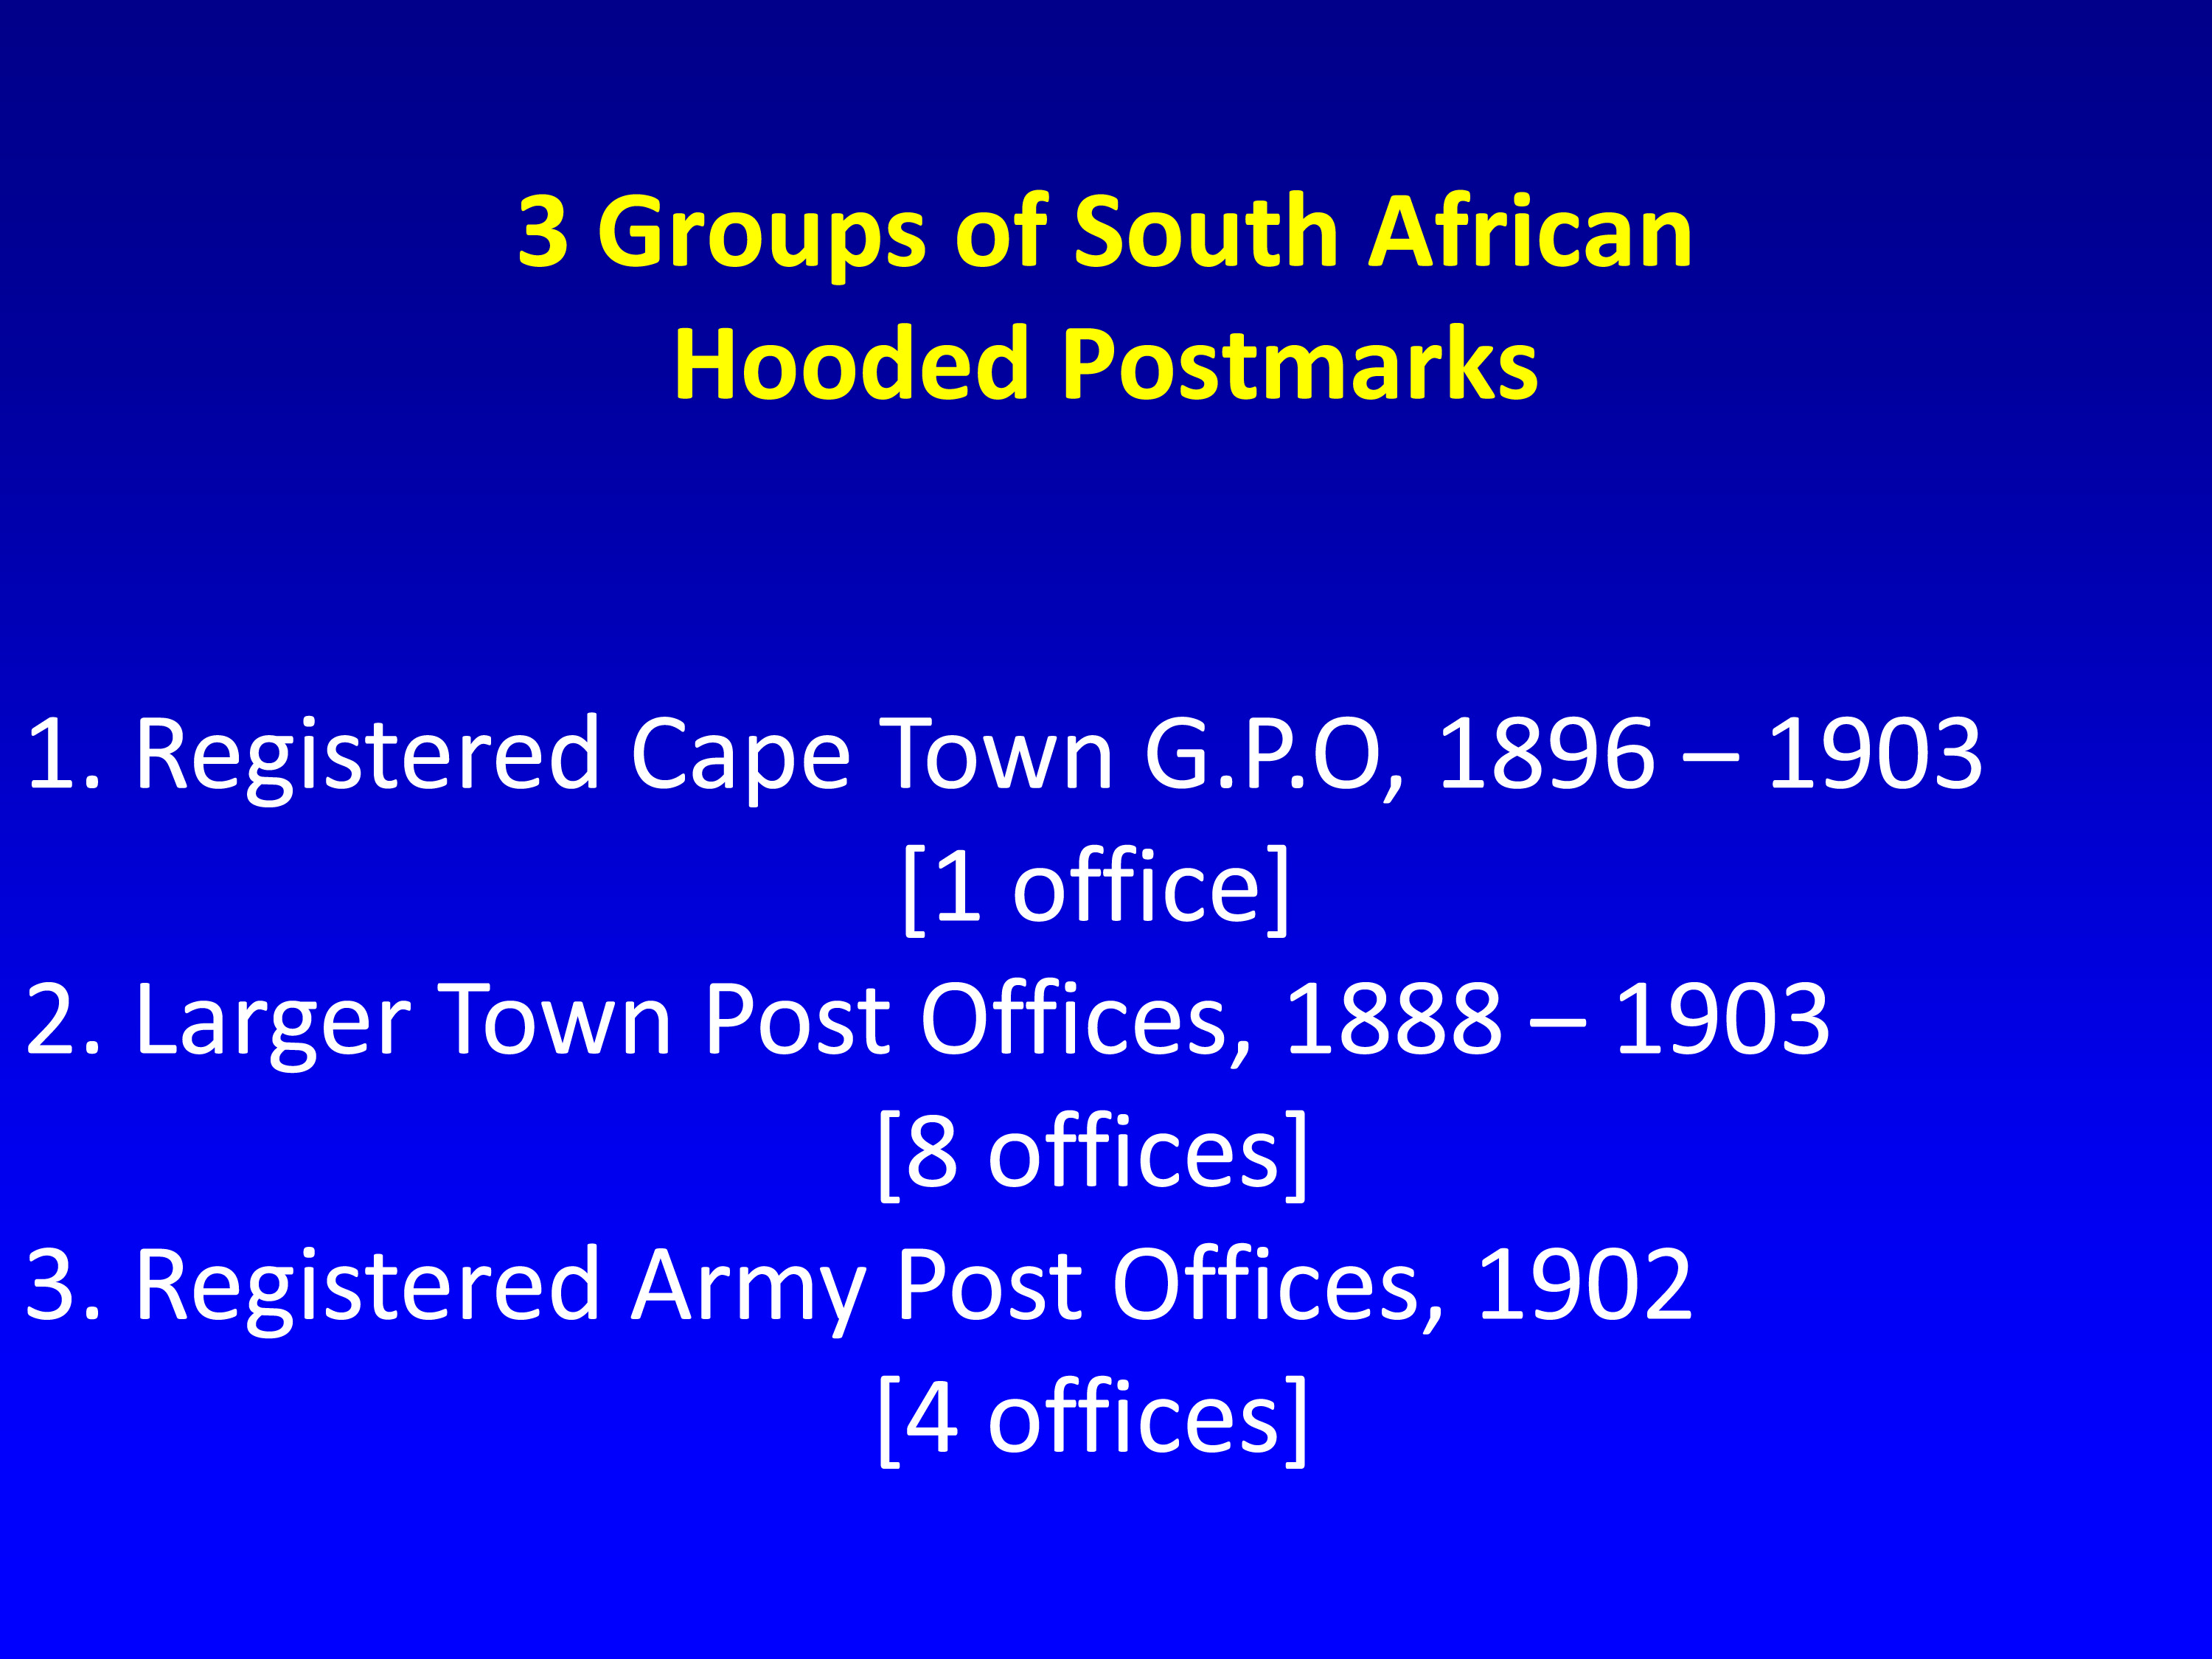 Hooded-Postmarks-of-southern-Africa-5.jpg